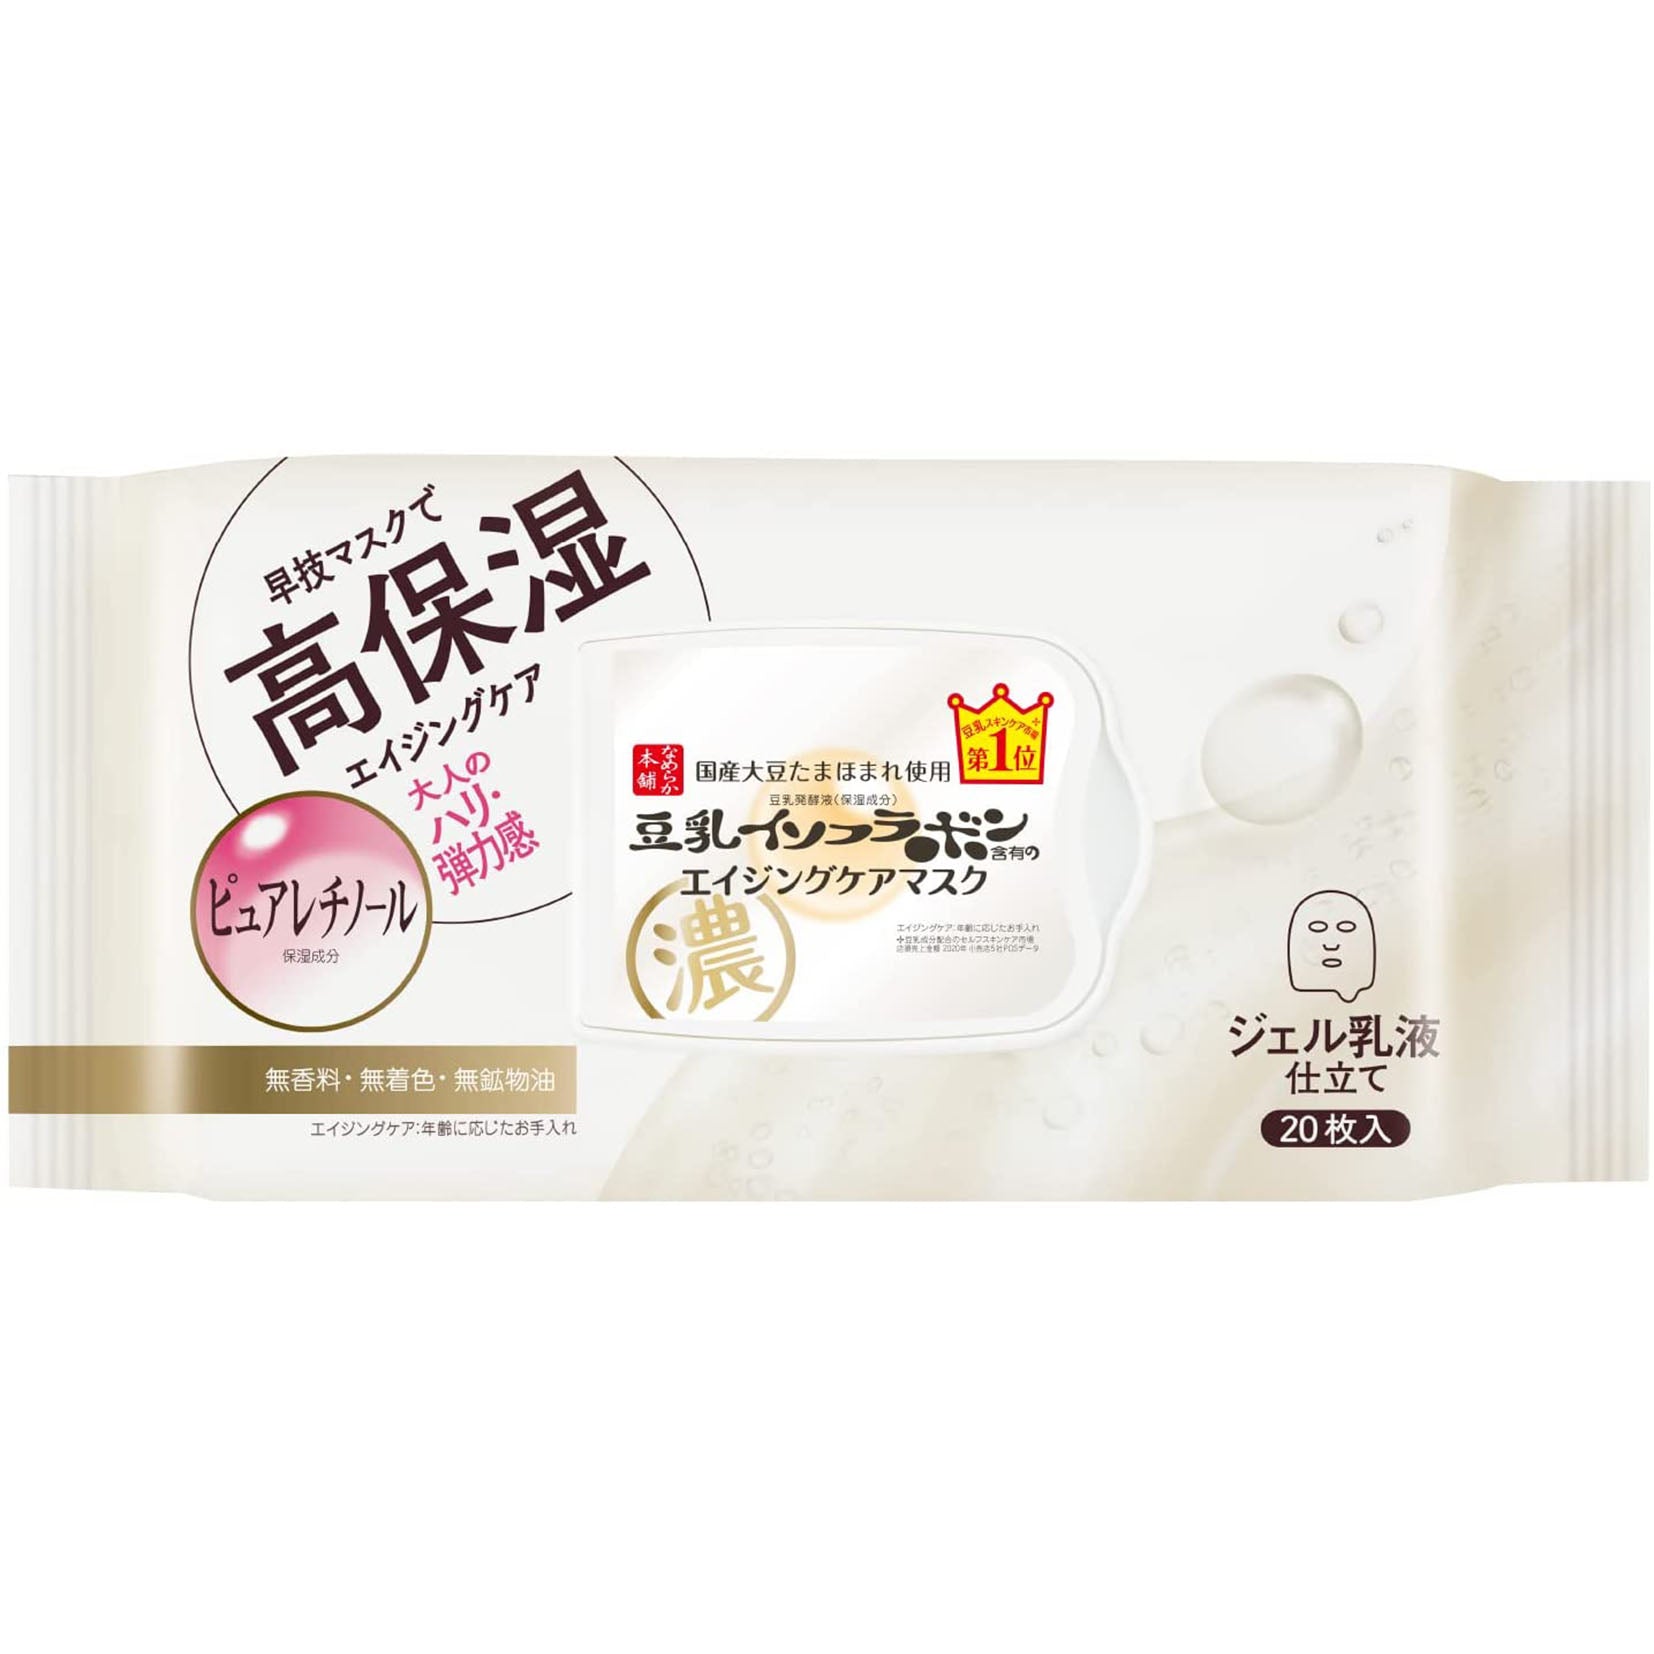 Sana Nameraka Honpo Soy Milk Isoflavone Wrinkle Sheet Mask N -1box For 20pcs - Harajuku Culture Japan - Japanease Products Store Beauty and Stationery